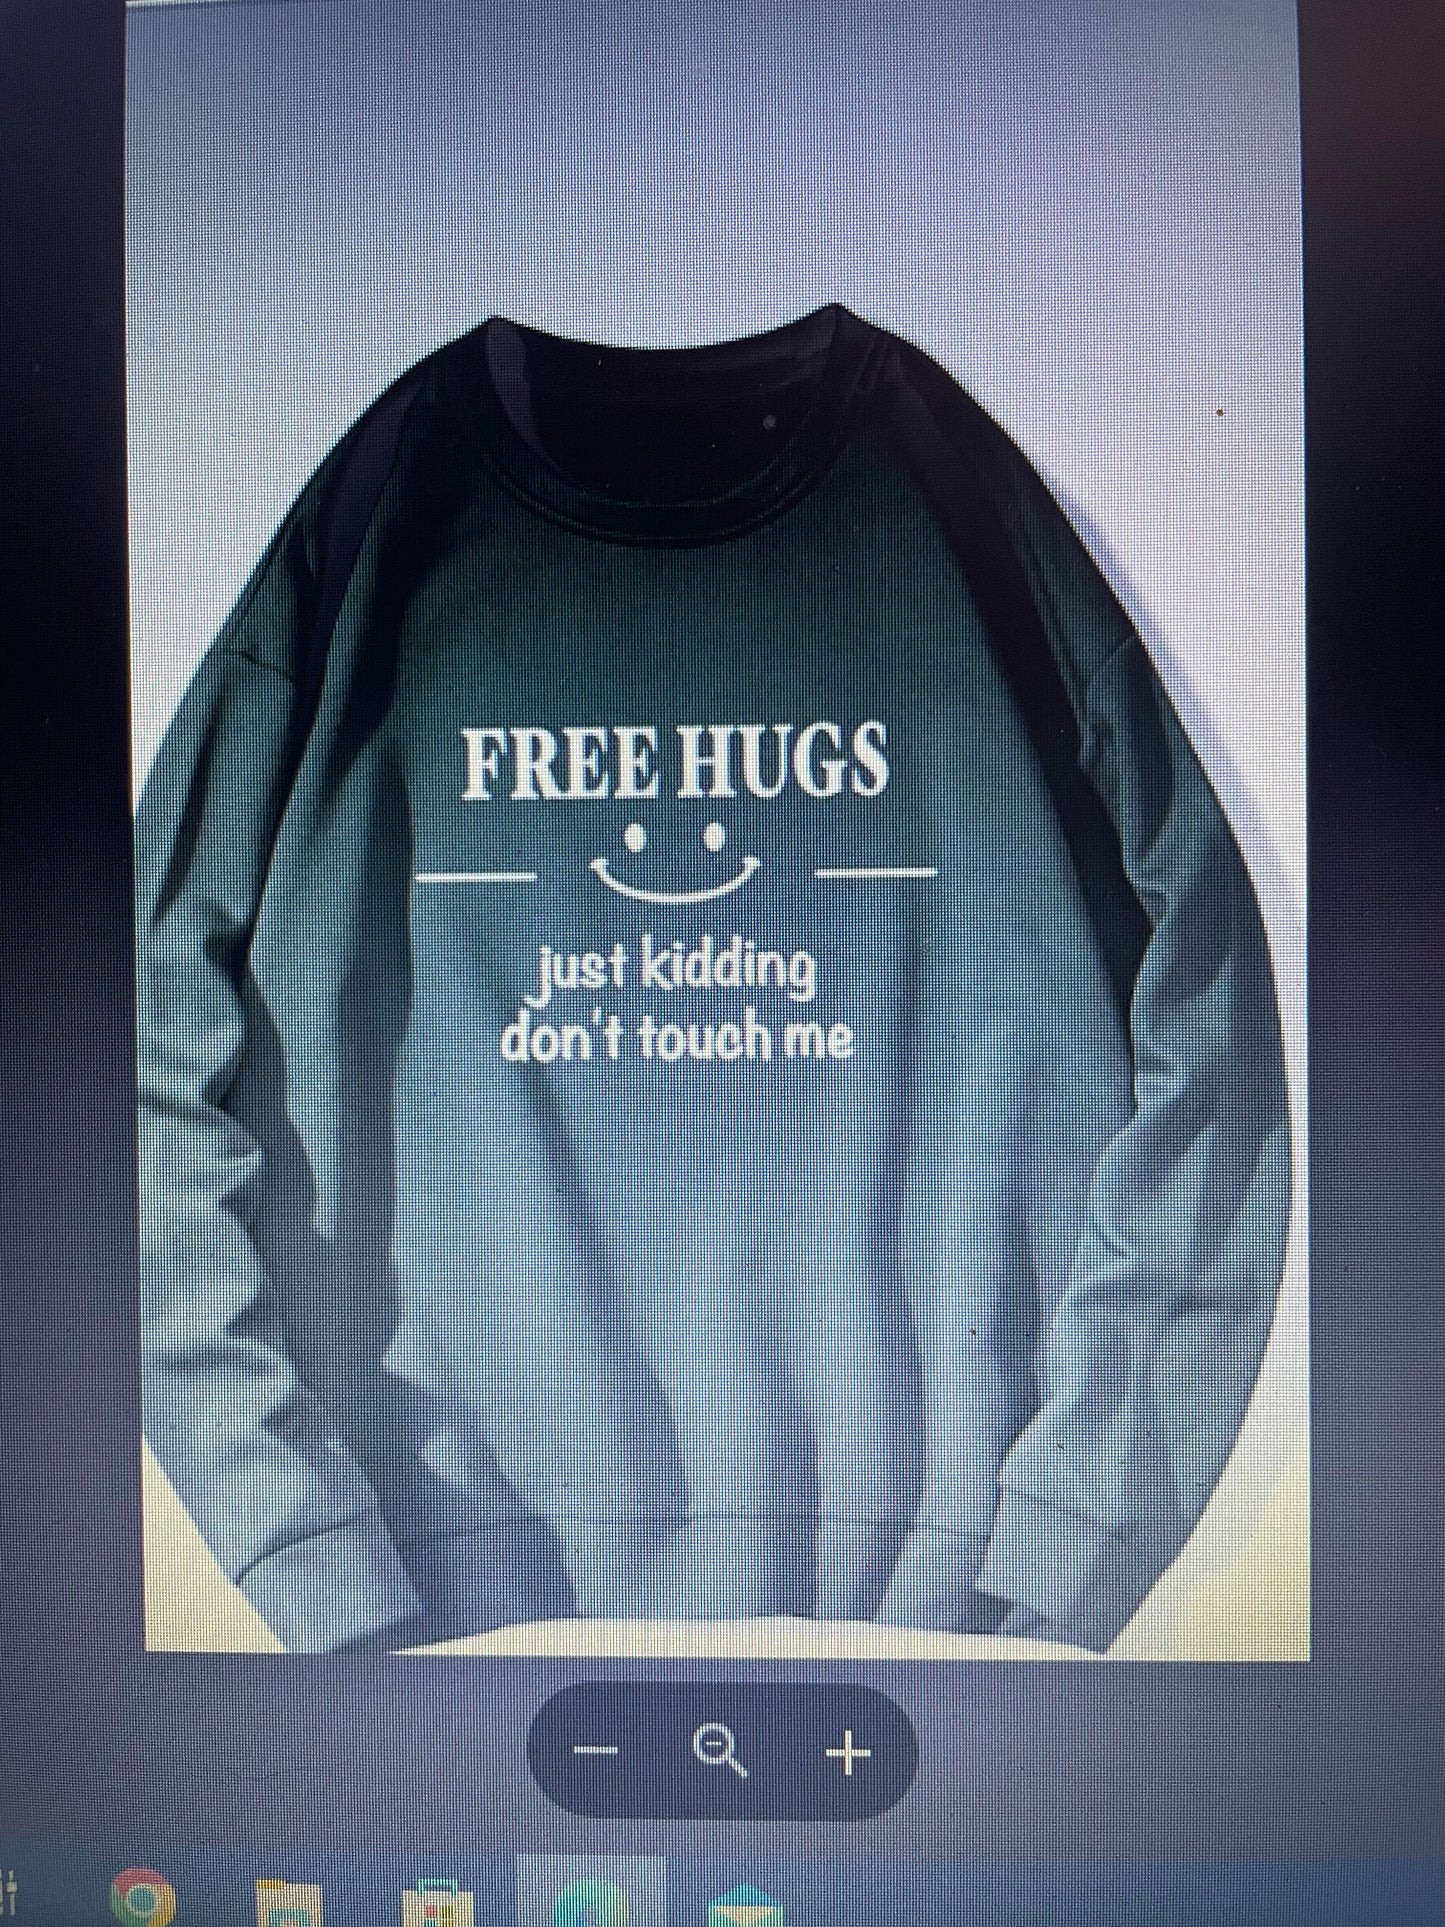 Free Hugs, Just Kidding Don’t Touch Me Sweatshirt